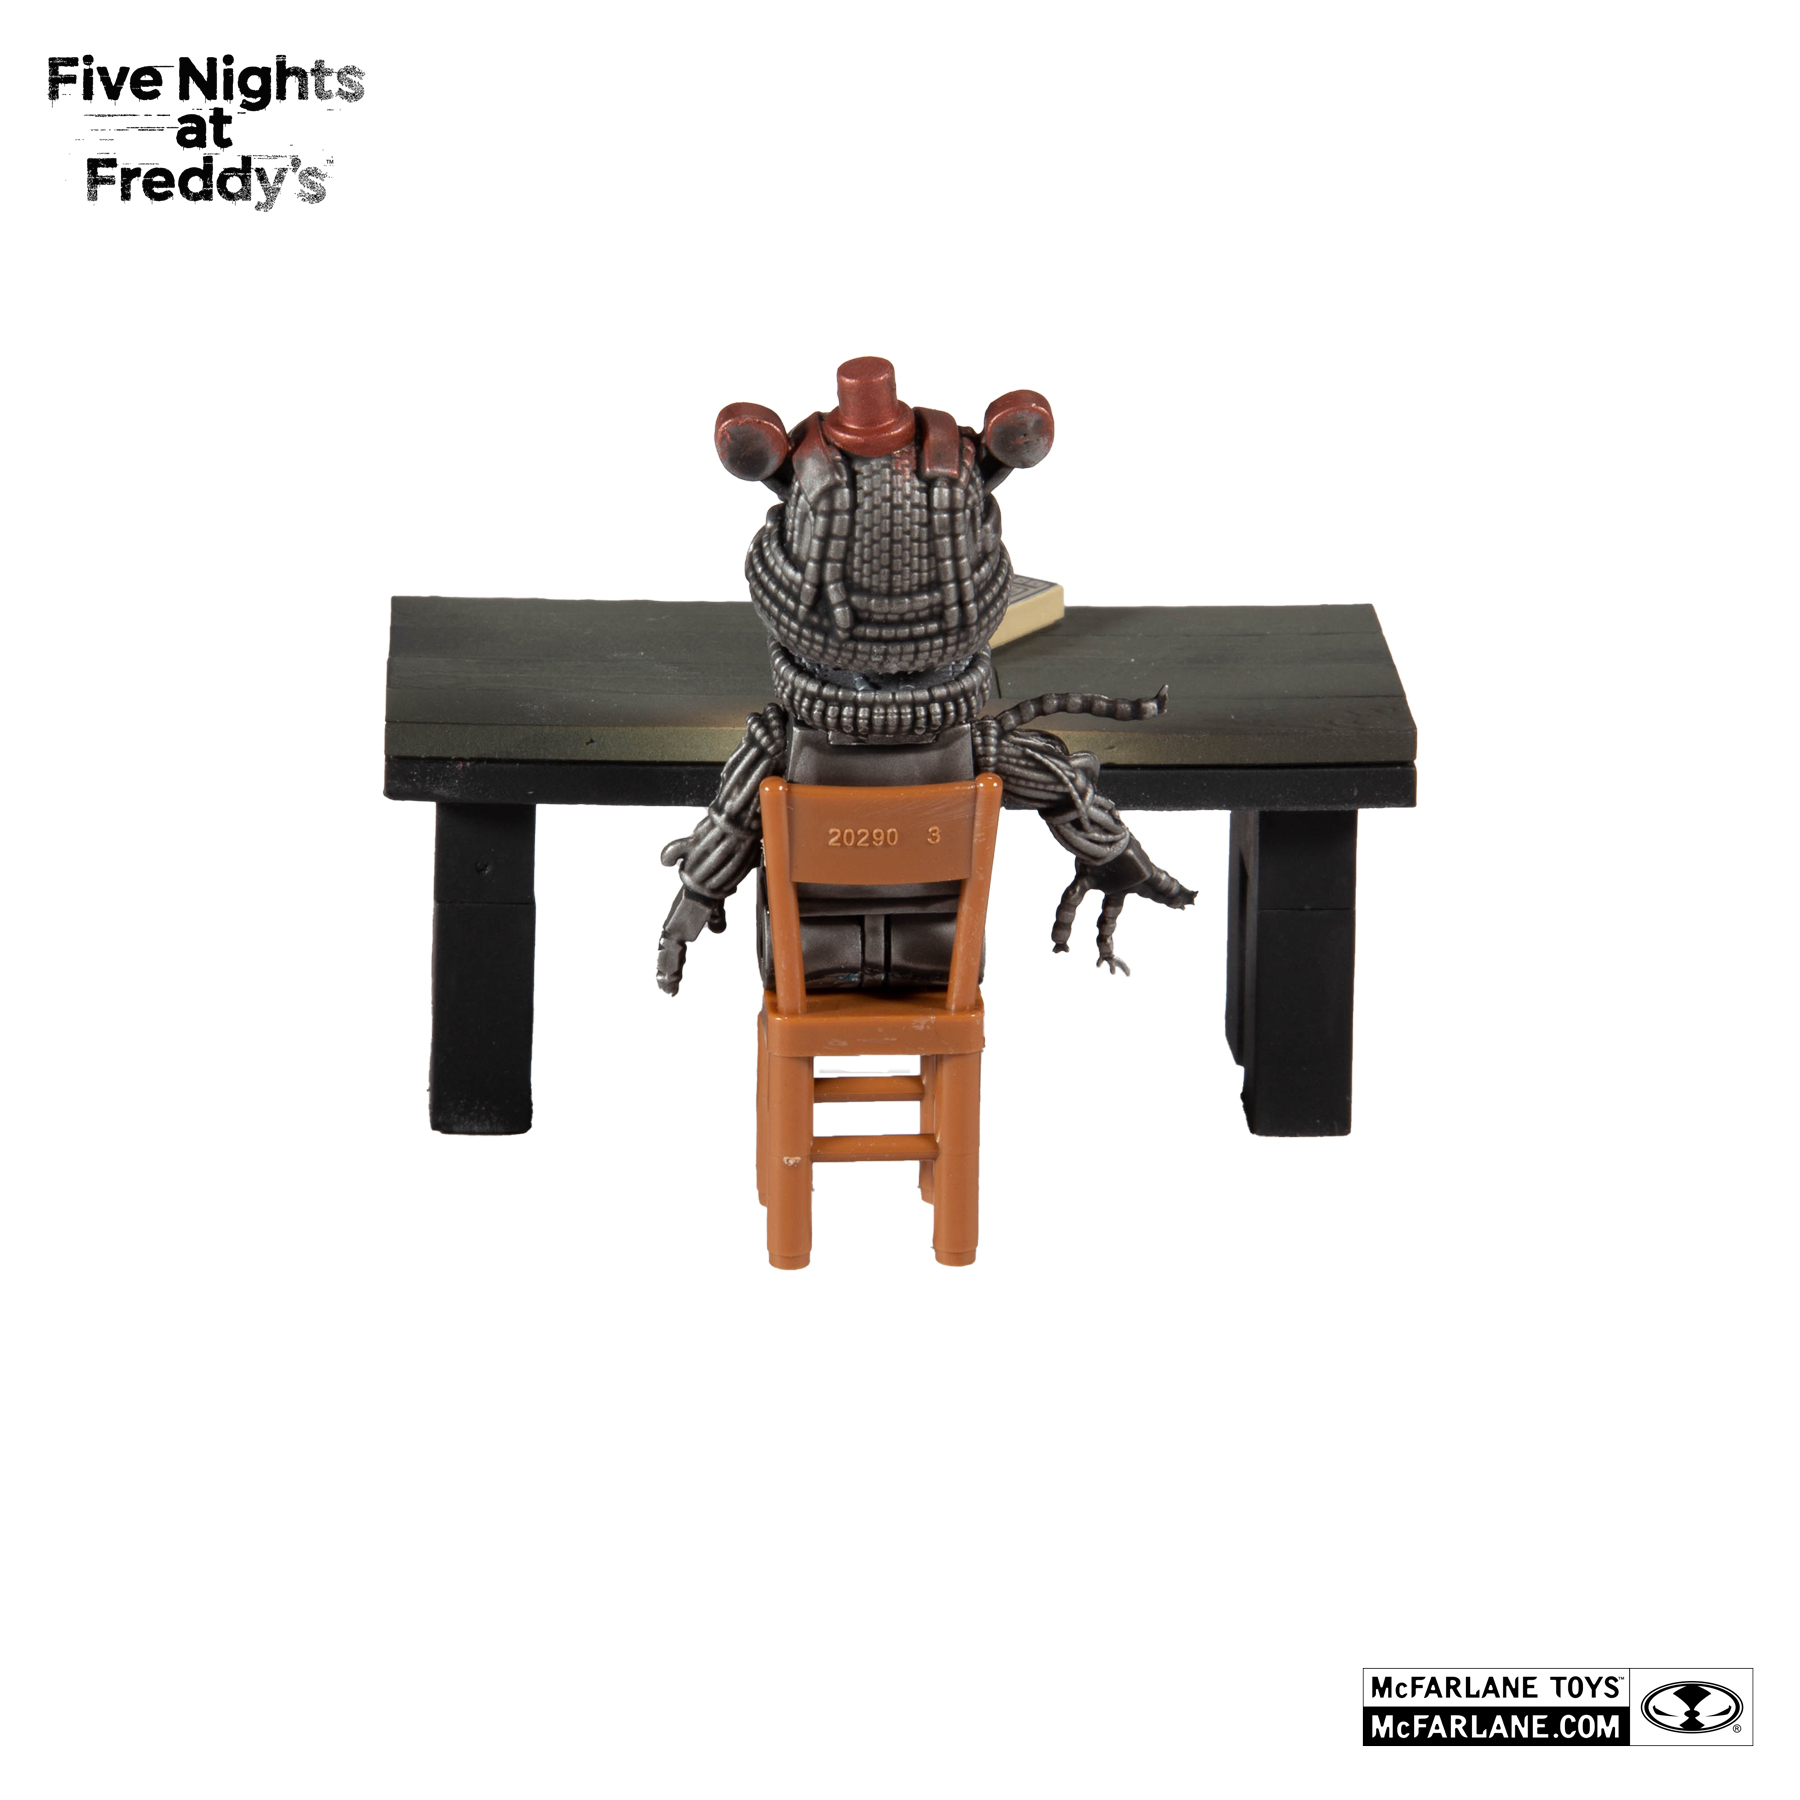 McFarlane FNAF Five Nights at Freddy's Molten Freddy Mini Action Figure